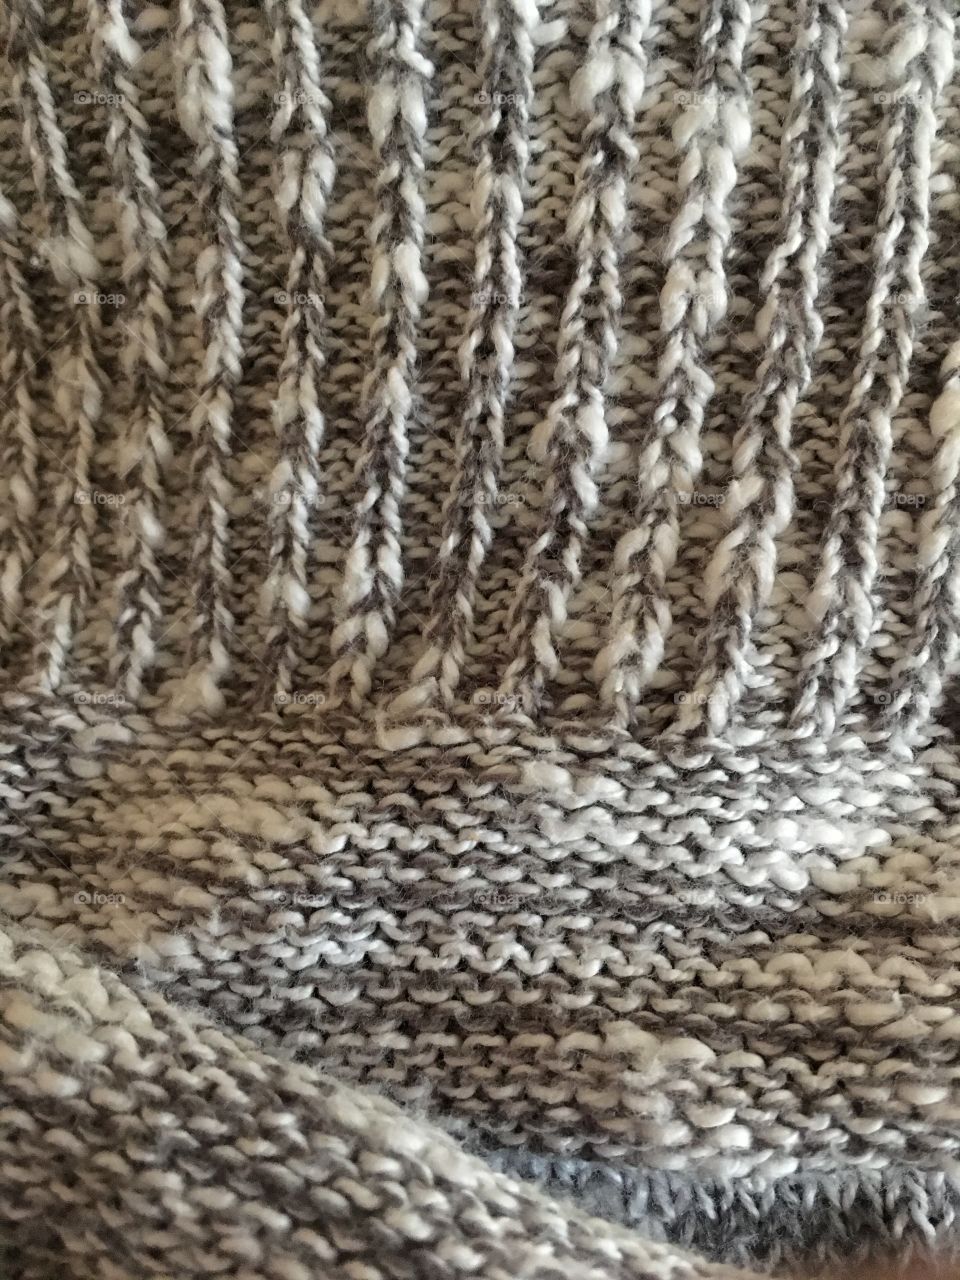 Sweater fibers